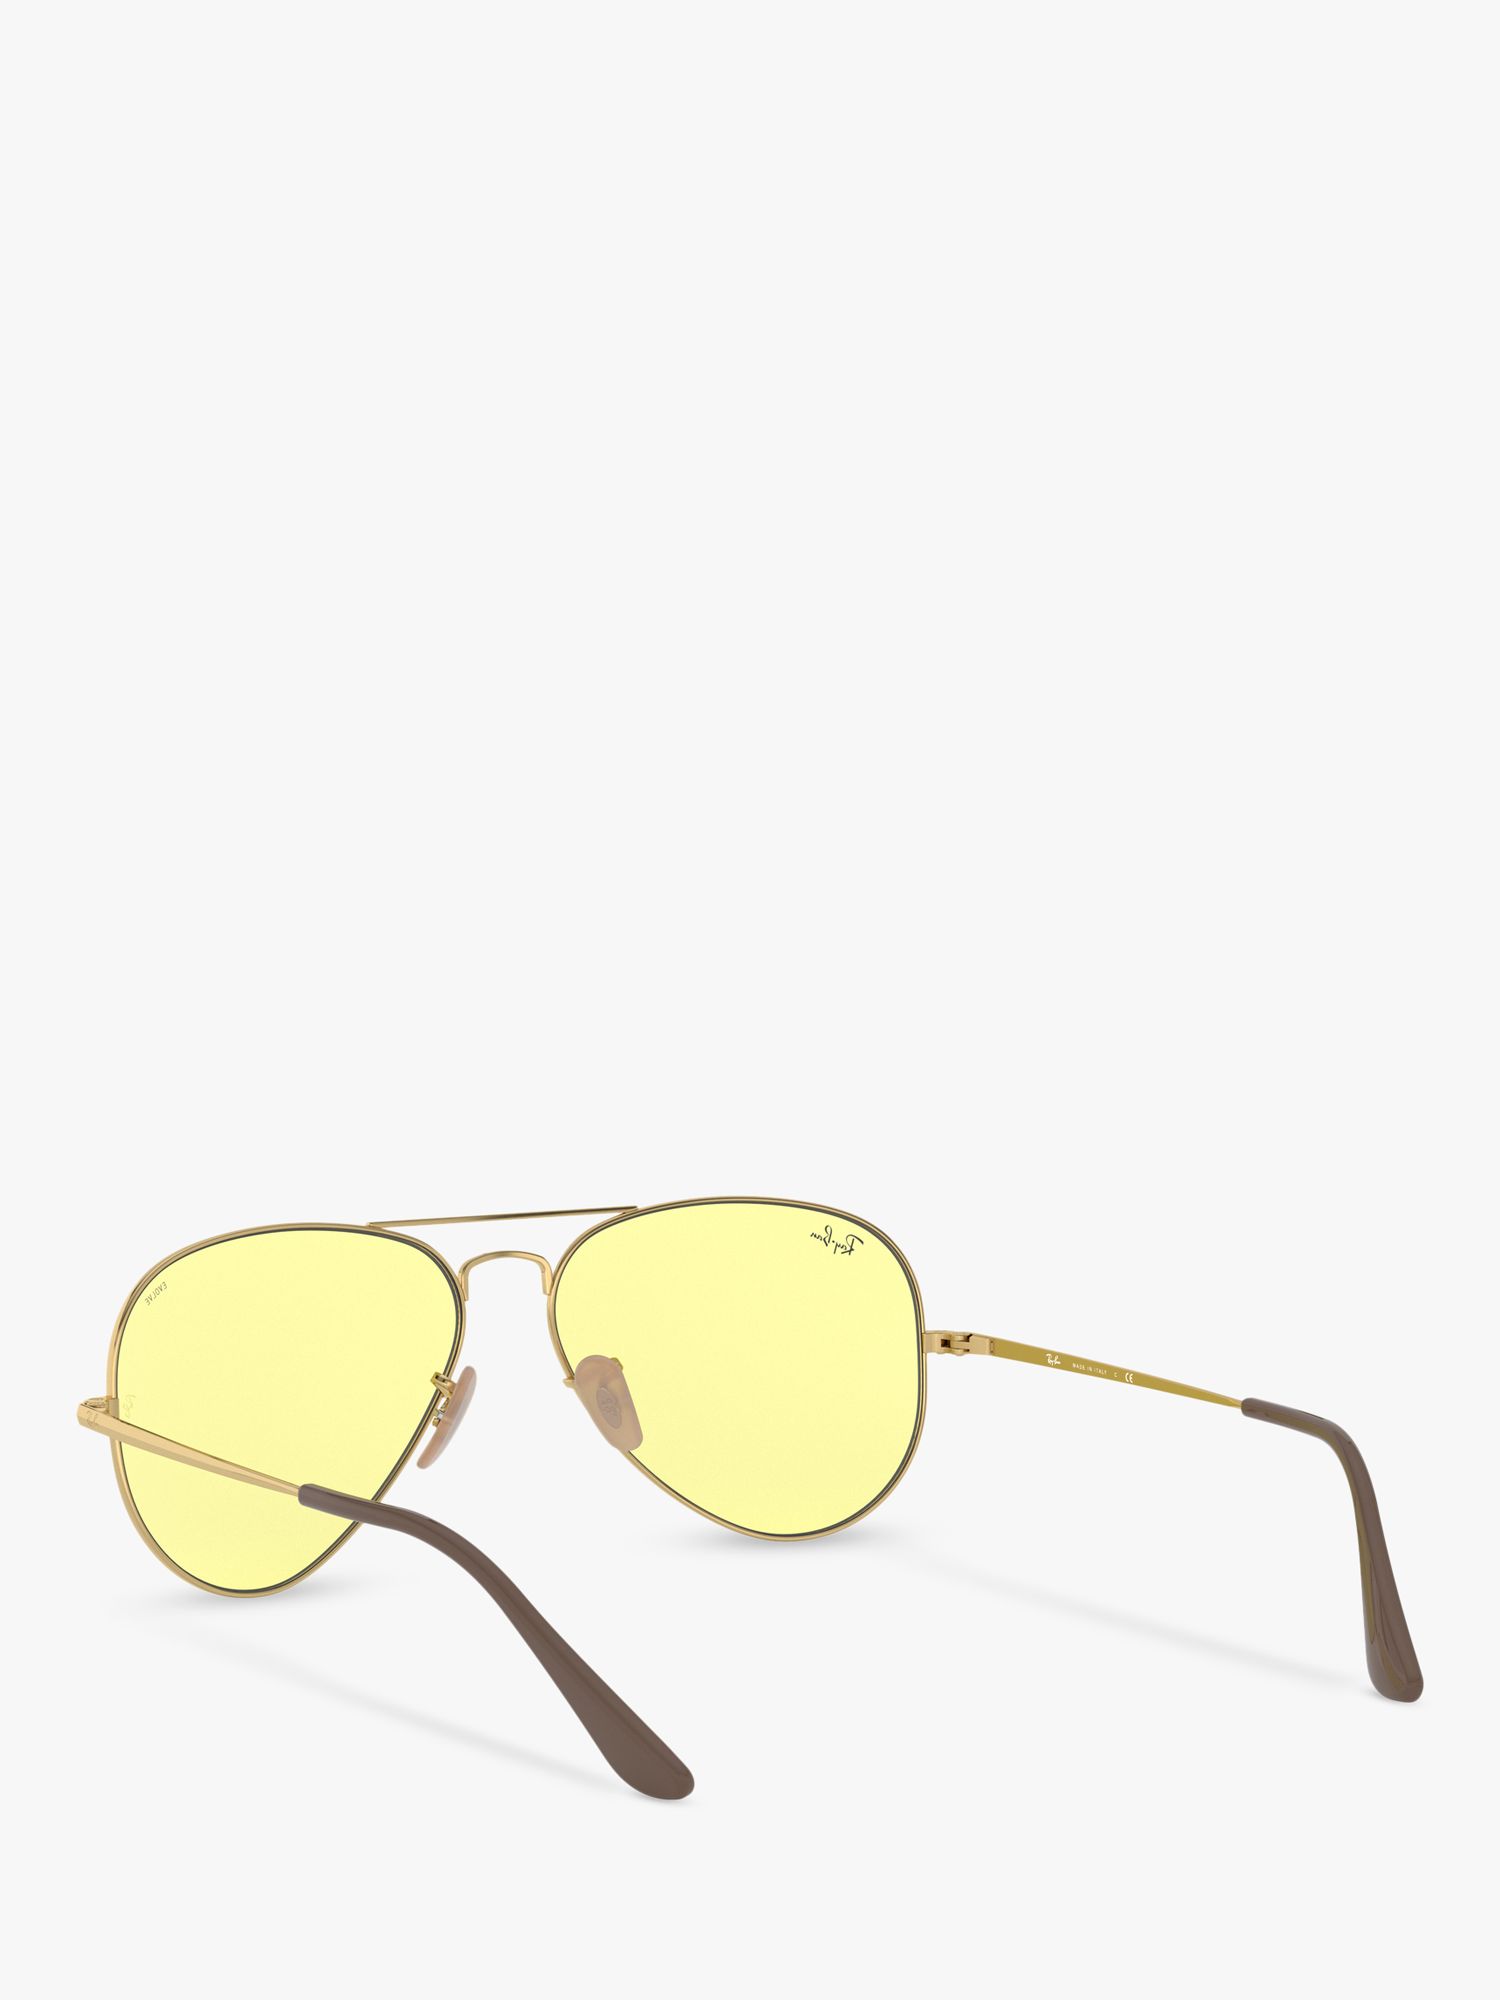 Ray-Ban RB3689 Men's Evolve Aviator Sunglasses, Gold/Light Yellow  Photochromic at John Lewis & Partners